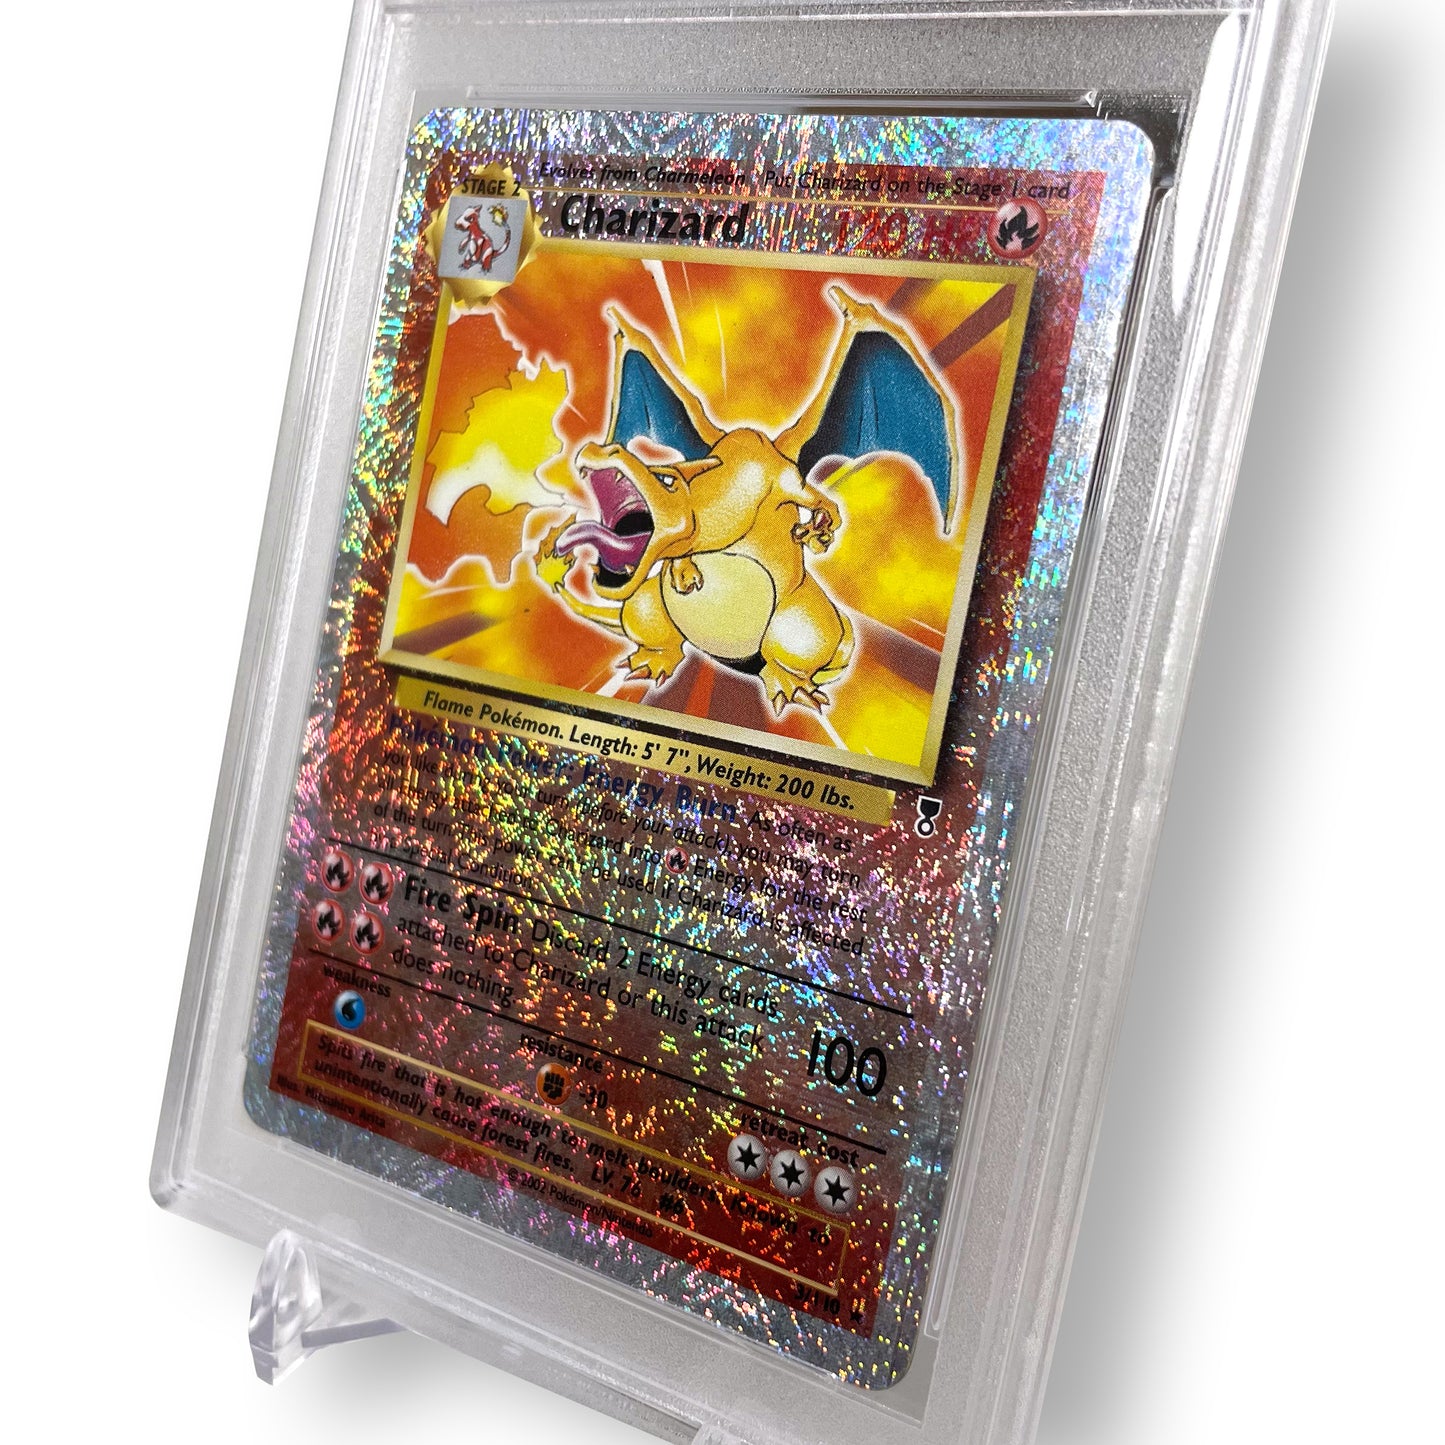 2002 Pokémon Charizard - Rev. Foil Legendary Collection